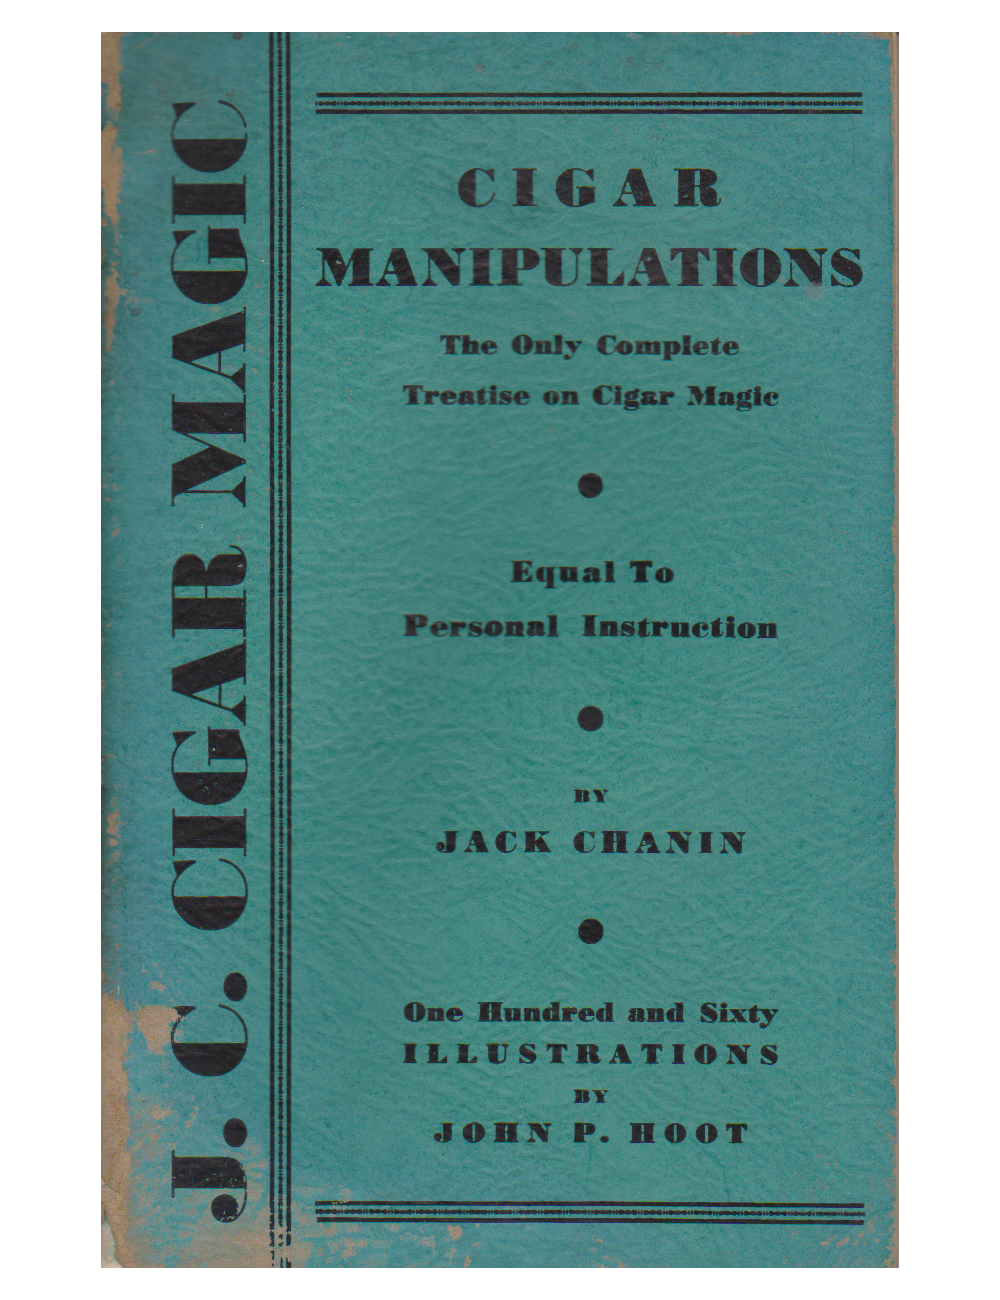 J. C. CIGAR MAGIC (JACK CHANIN)